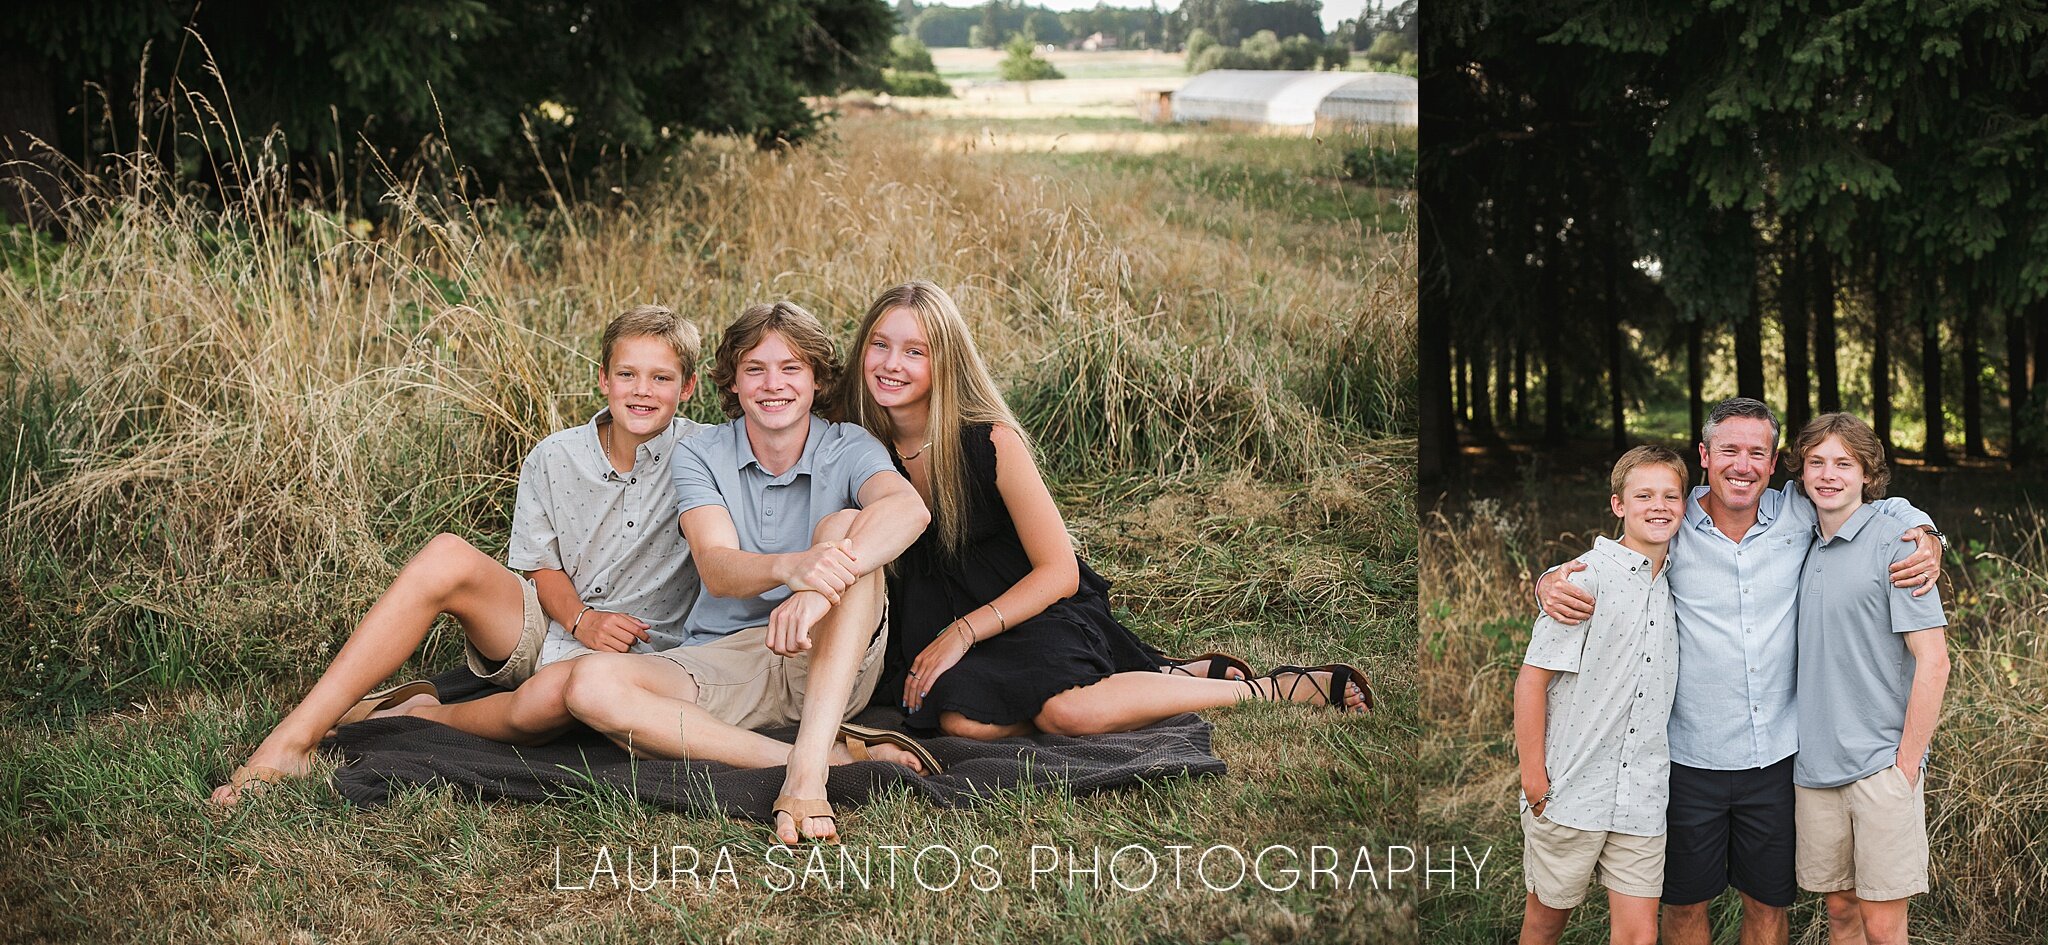 Laura Santos Photography Portland Oregon Family Photographer_1736.jpg